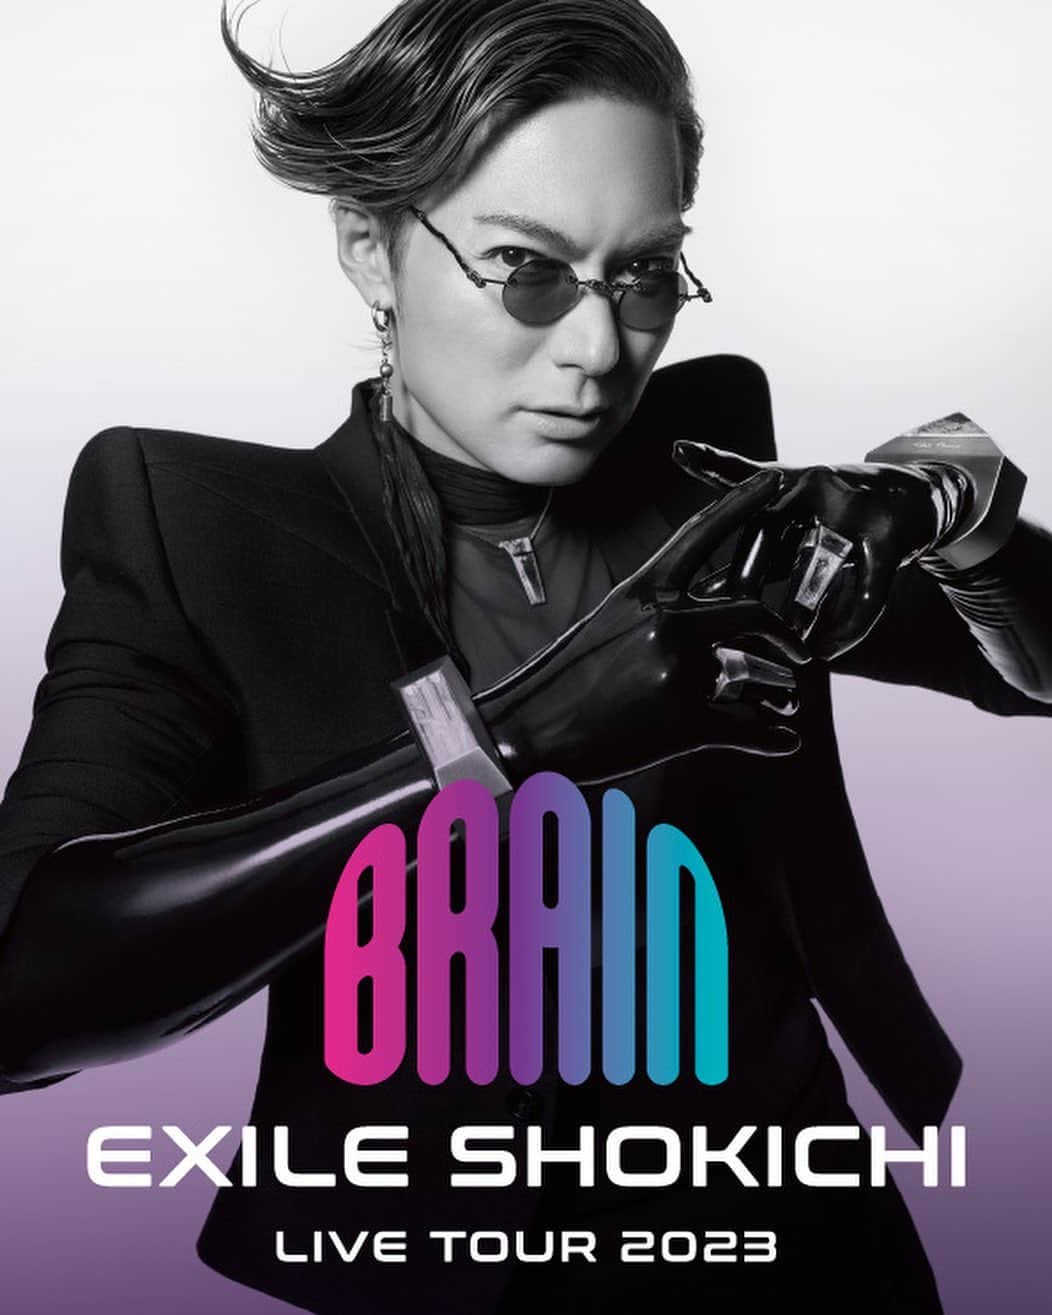 SHOKICHIのインスタグラム：「このインパクト大なビジュアルと共に遂に発表されました✨✨ EXILE SHOKICHI LIVE TOUR 2023 “BRAIN”  ビジュアルは脳内でSHOKICHI を操作するマッドサイエンティストというテーマで表現させて頂きました✨✨ ライブもEXILE、Second、SHOKICHI 、Sho Hendrix、K&K、プロデューサー、様々な自分を表現しますので楽しみにしていください🧠 #exileshokichi #brain」